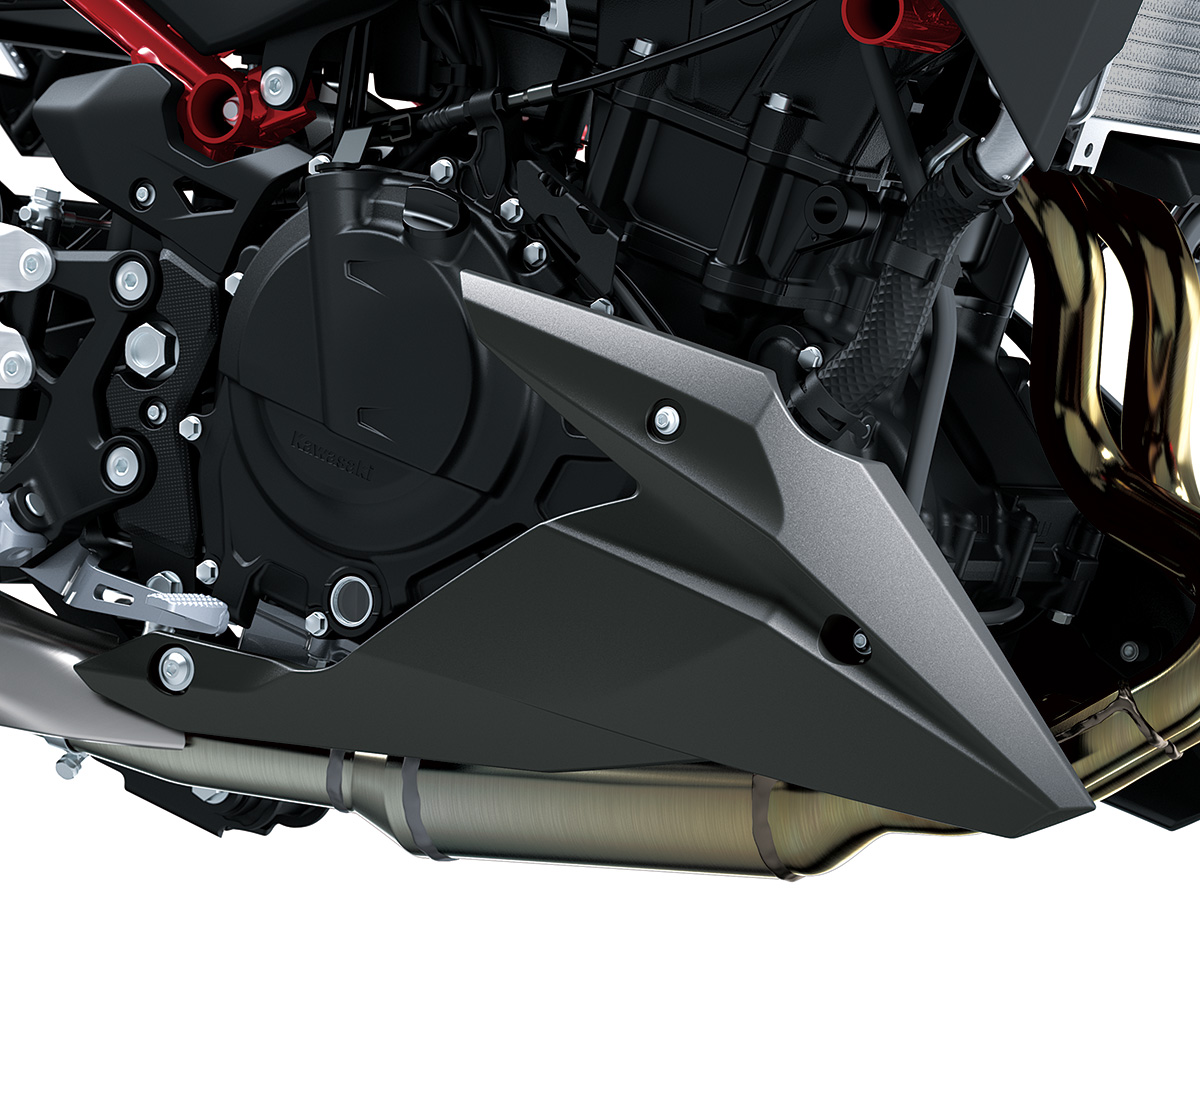 Z500 ABS Lower Cowling, Metallic Spark Black/660 | Kawasaki Motors 